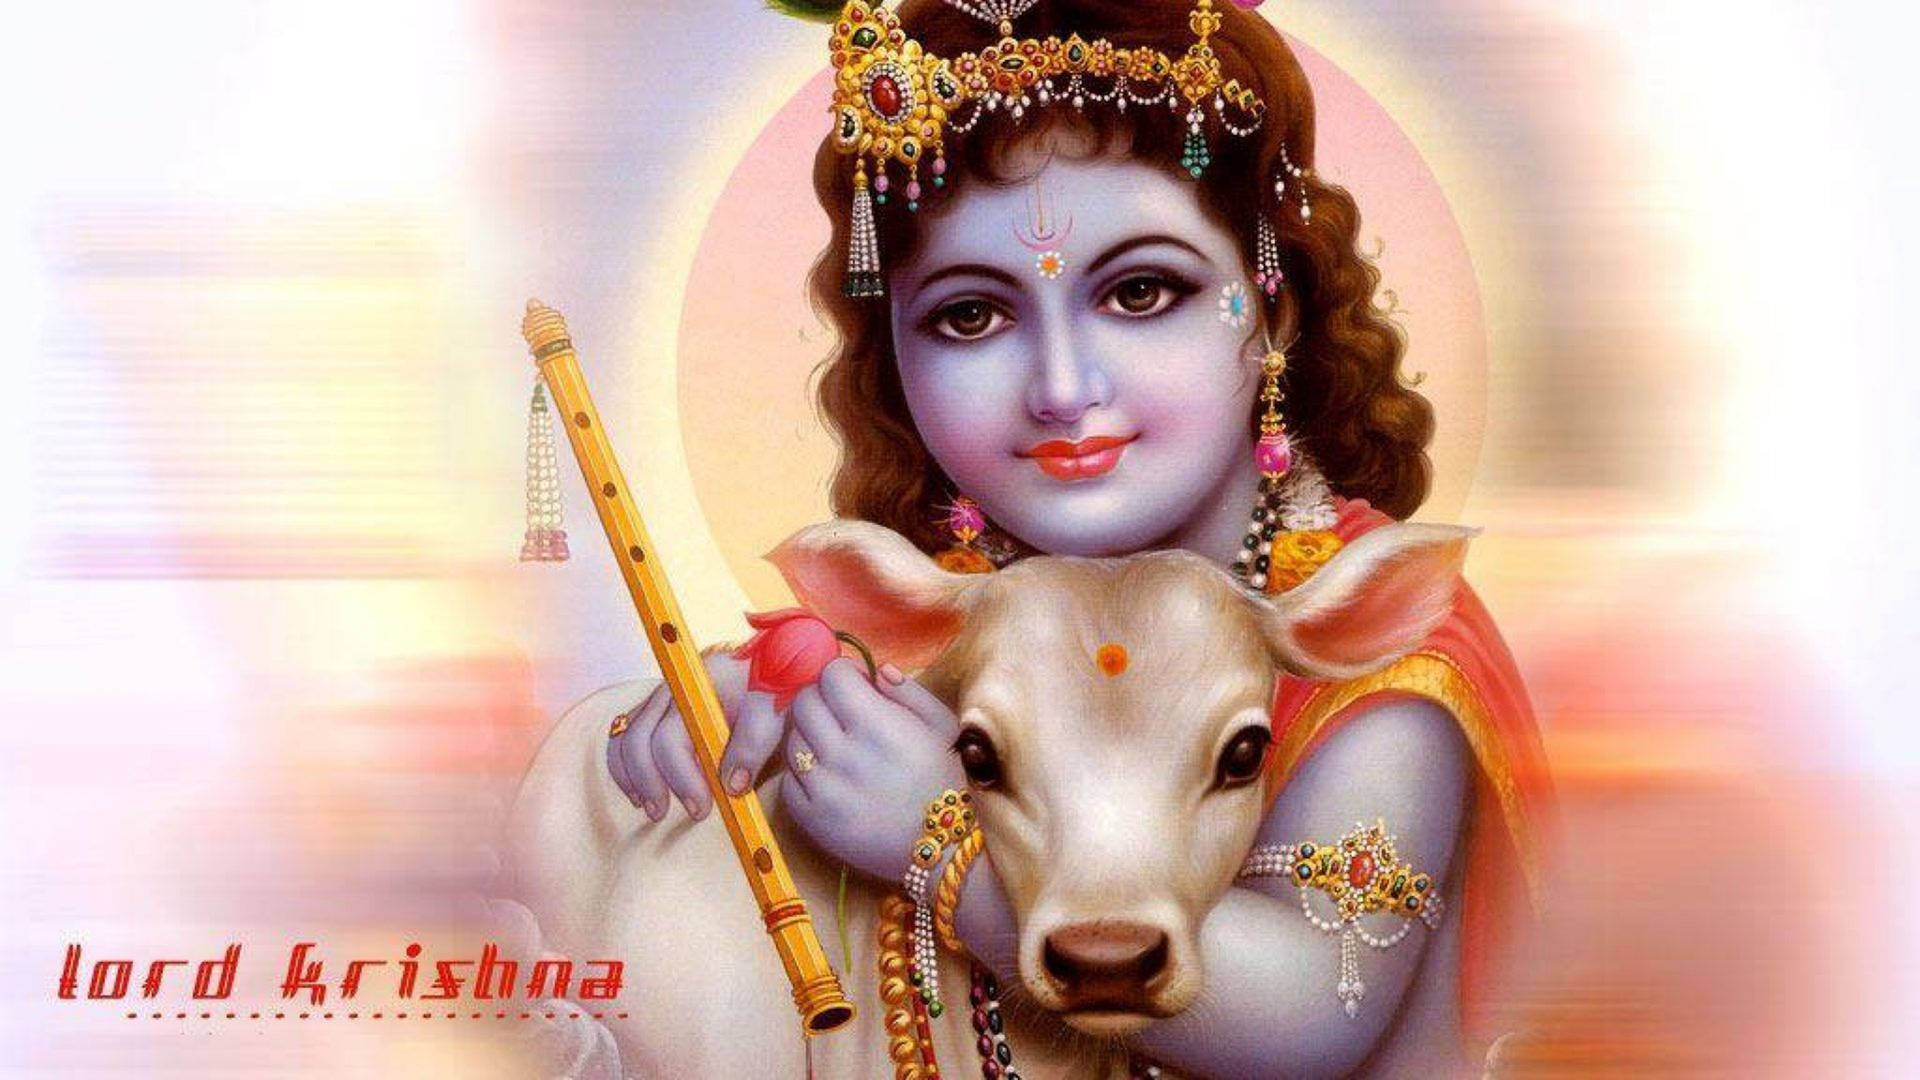 Captivating 4k Image Of Lord Krishna With Authentic Navaratna Jewelry Background